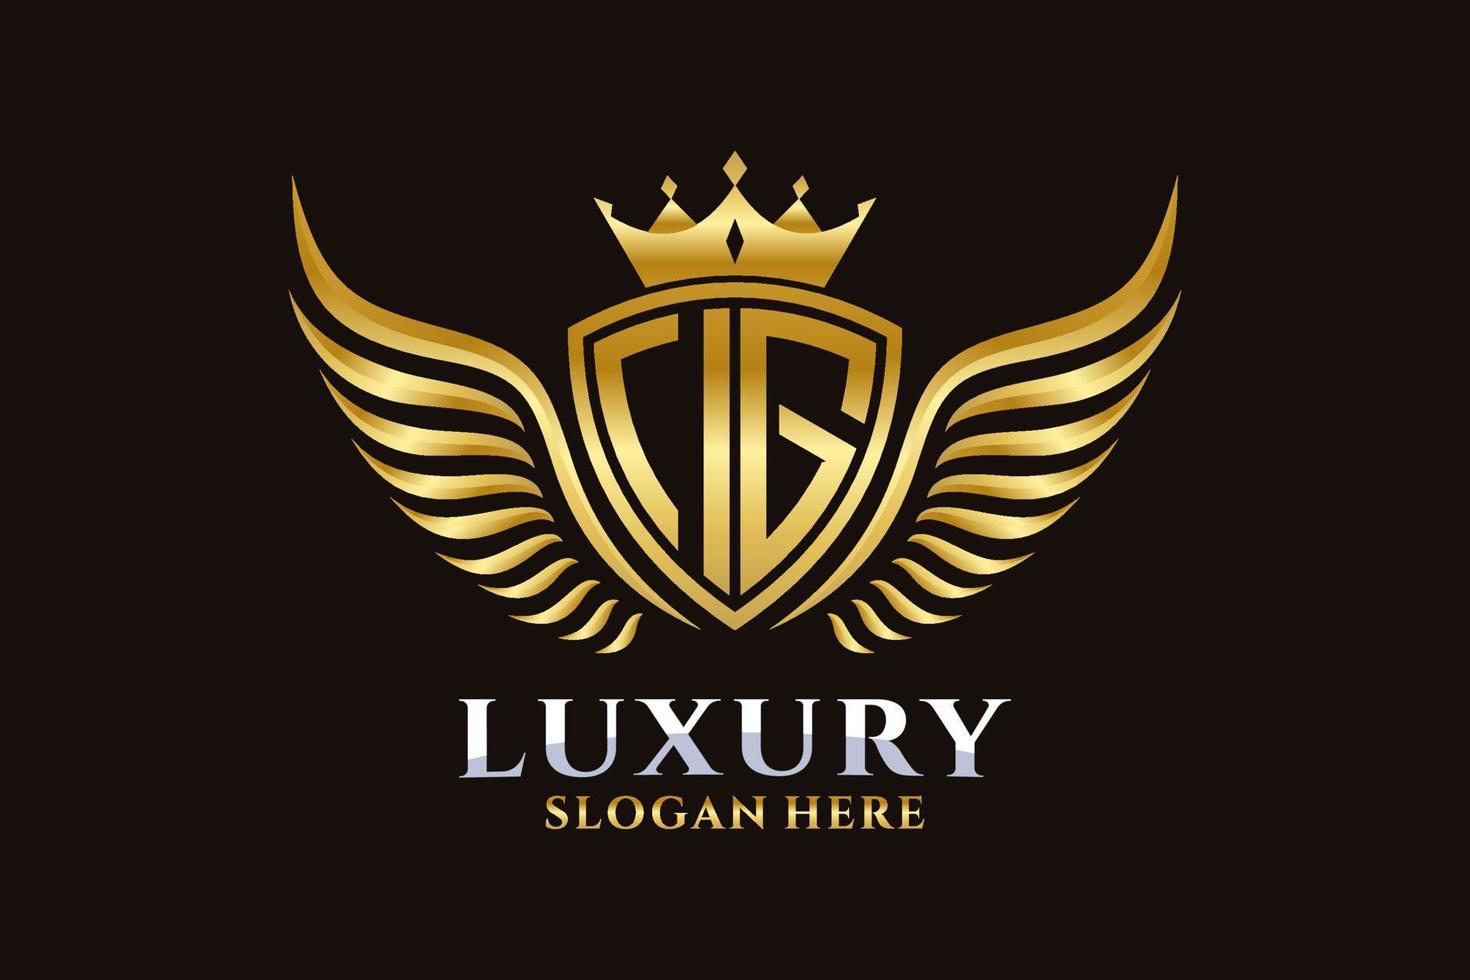 luxe Koninklijk vleugel brief ig kam goud kleur logo vector, zege logo, kam logo, vleugel logo, vector logo sjabloon.